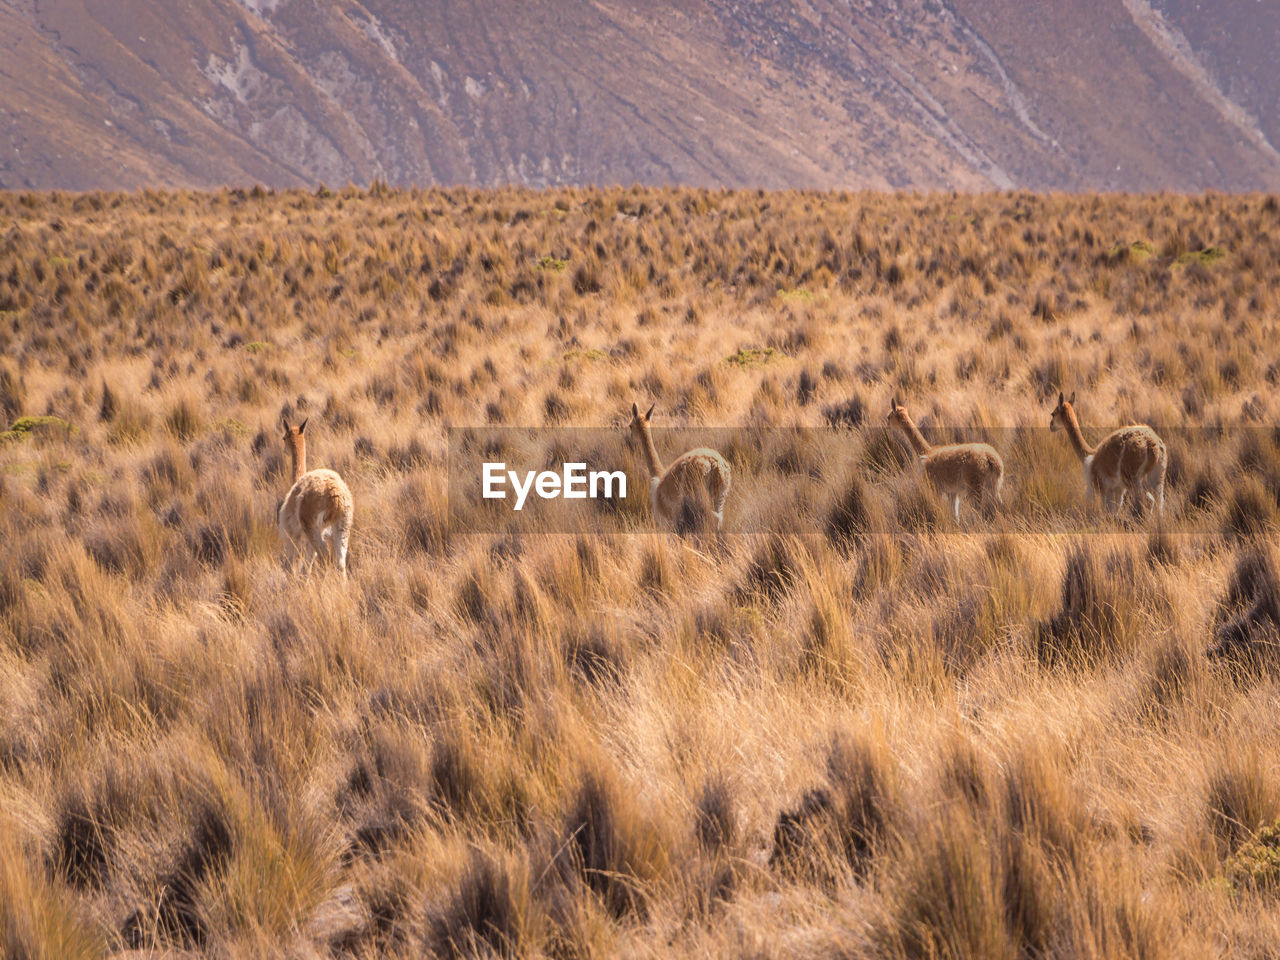 Flock of vicuñas in a field